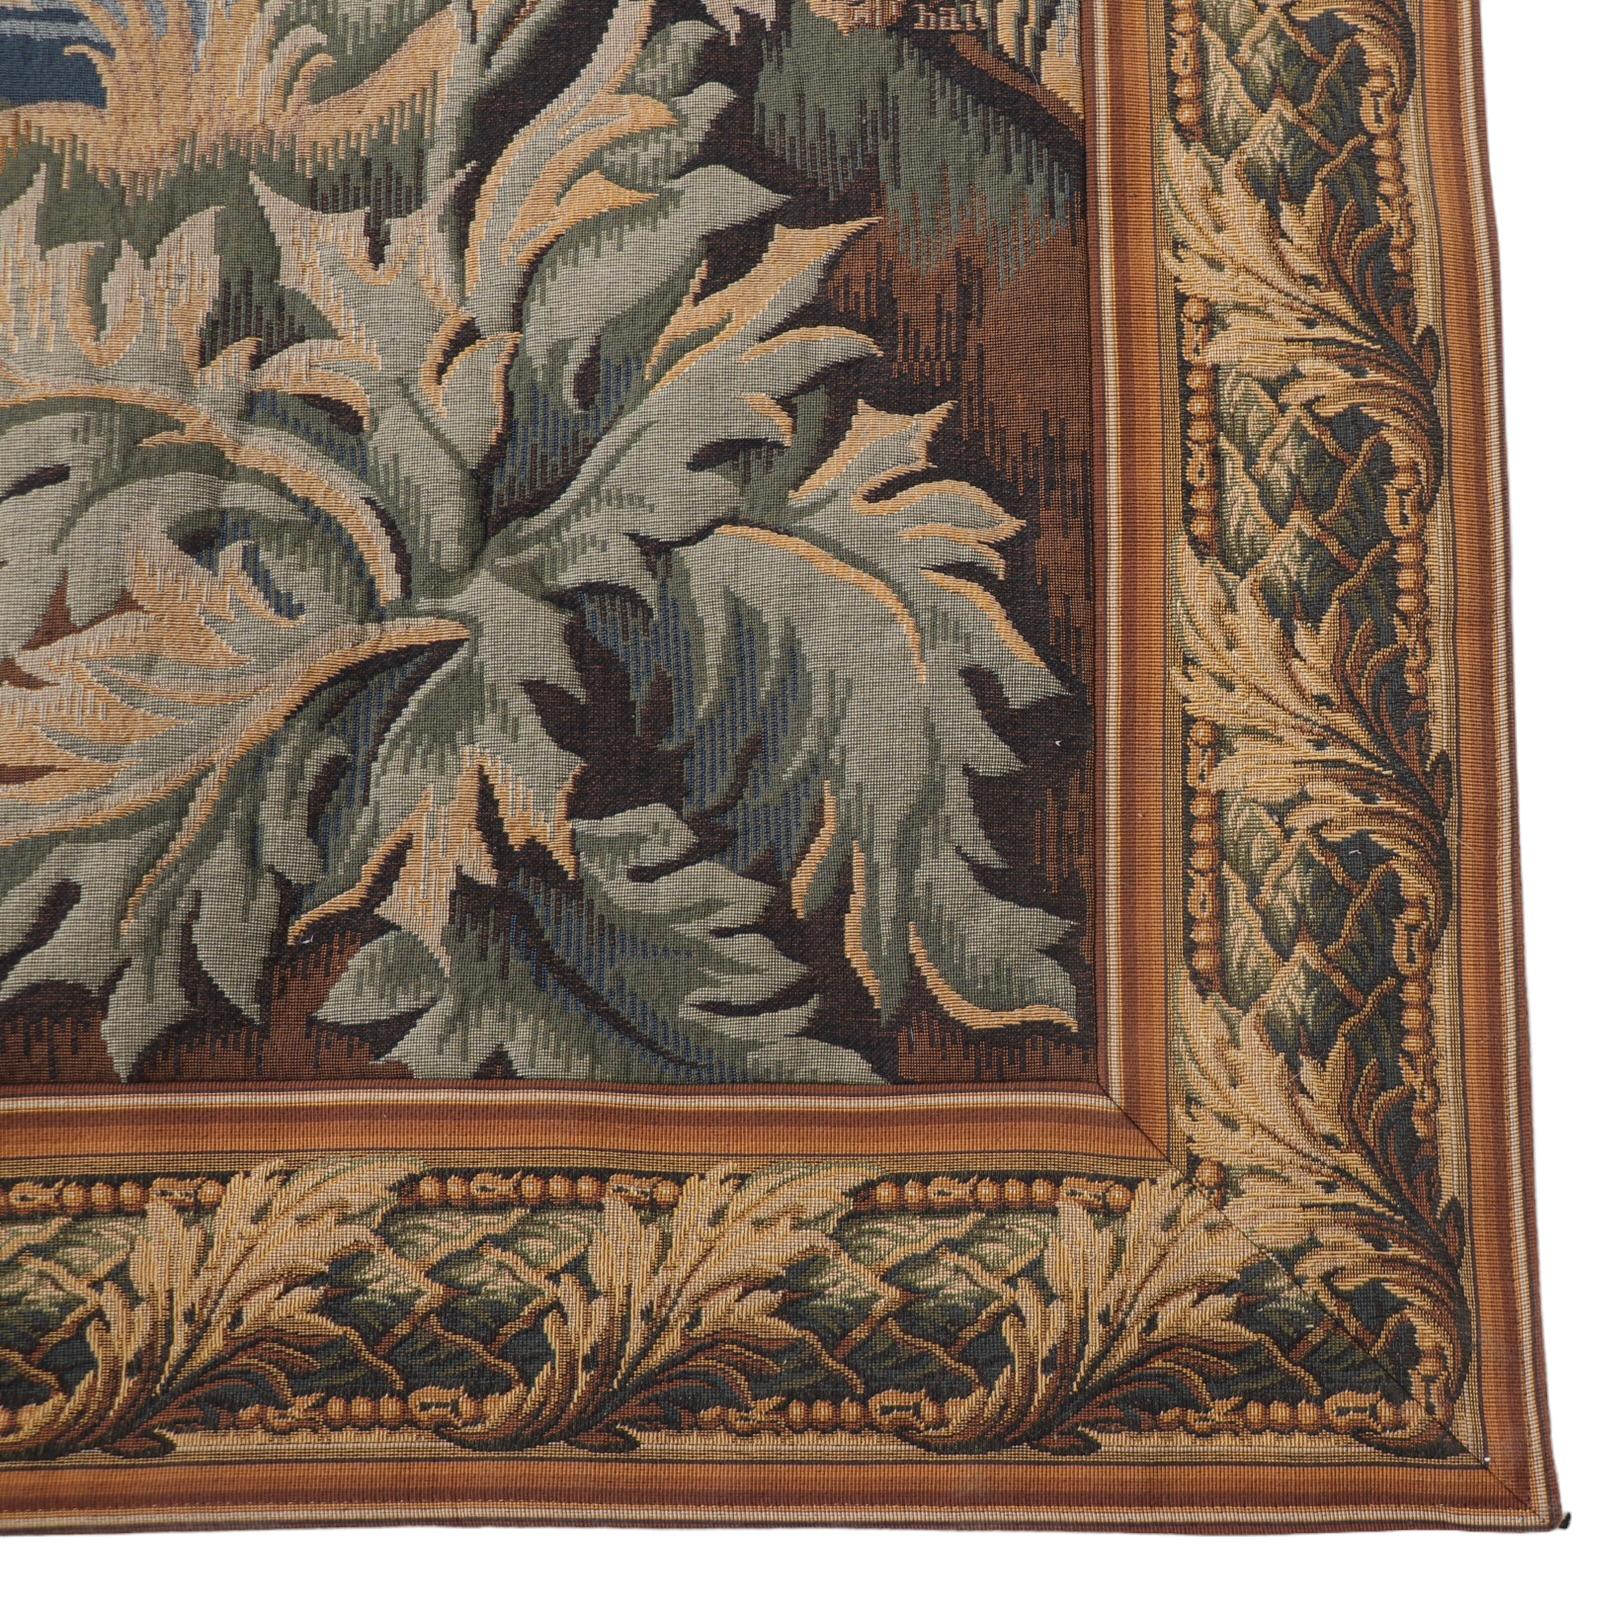  Contemporary French Tapestry La Foret De Clarmarais  For Sale 4